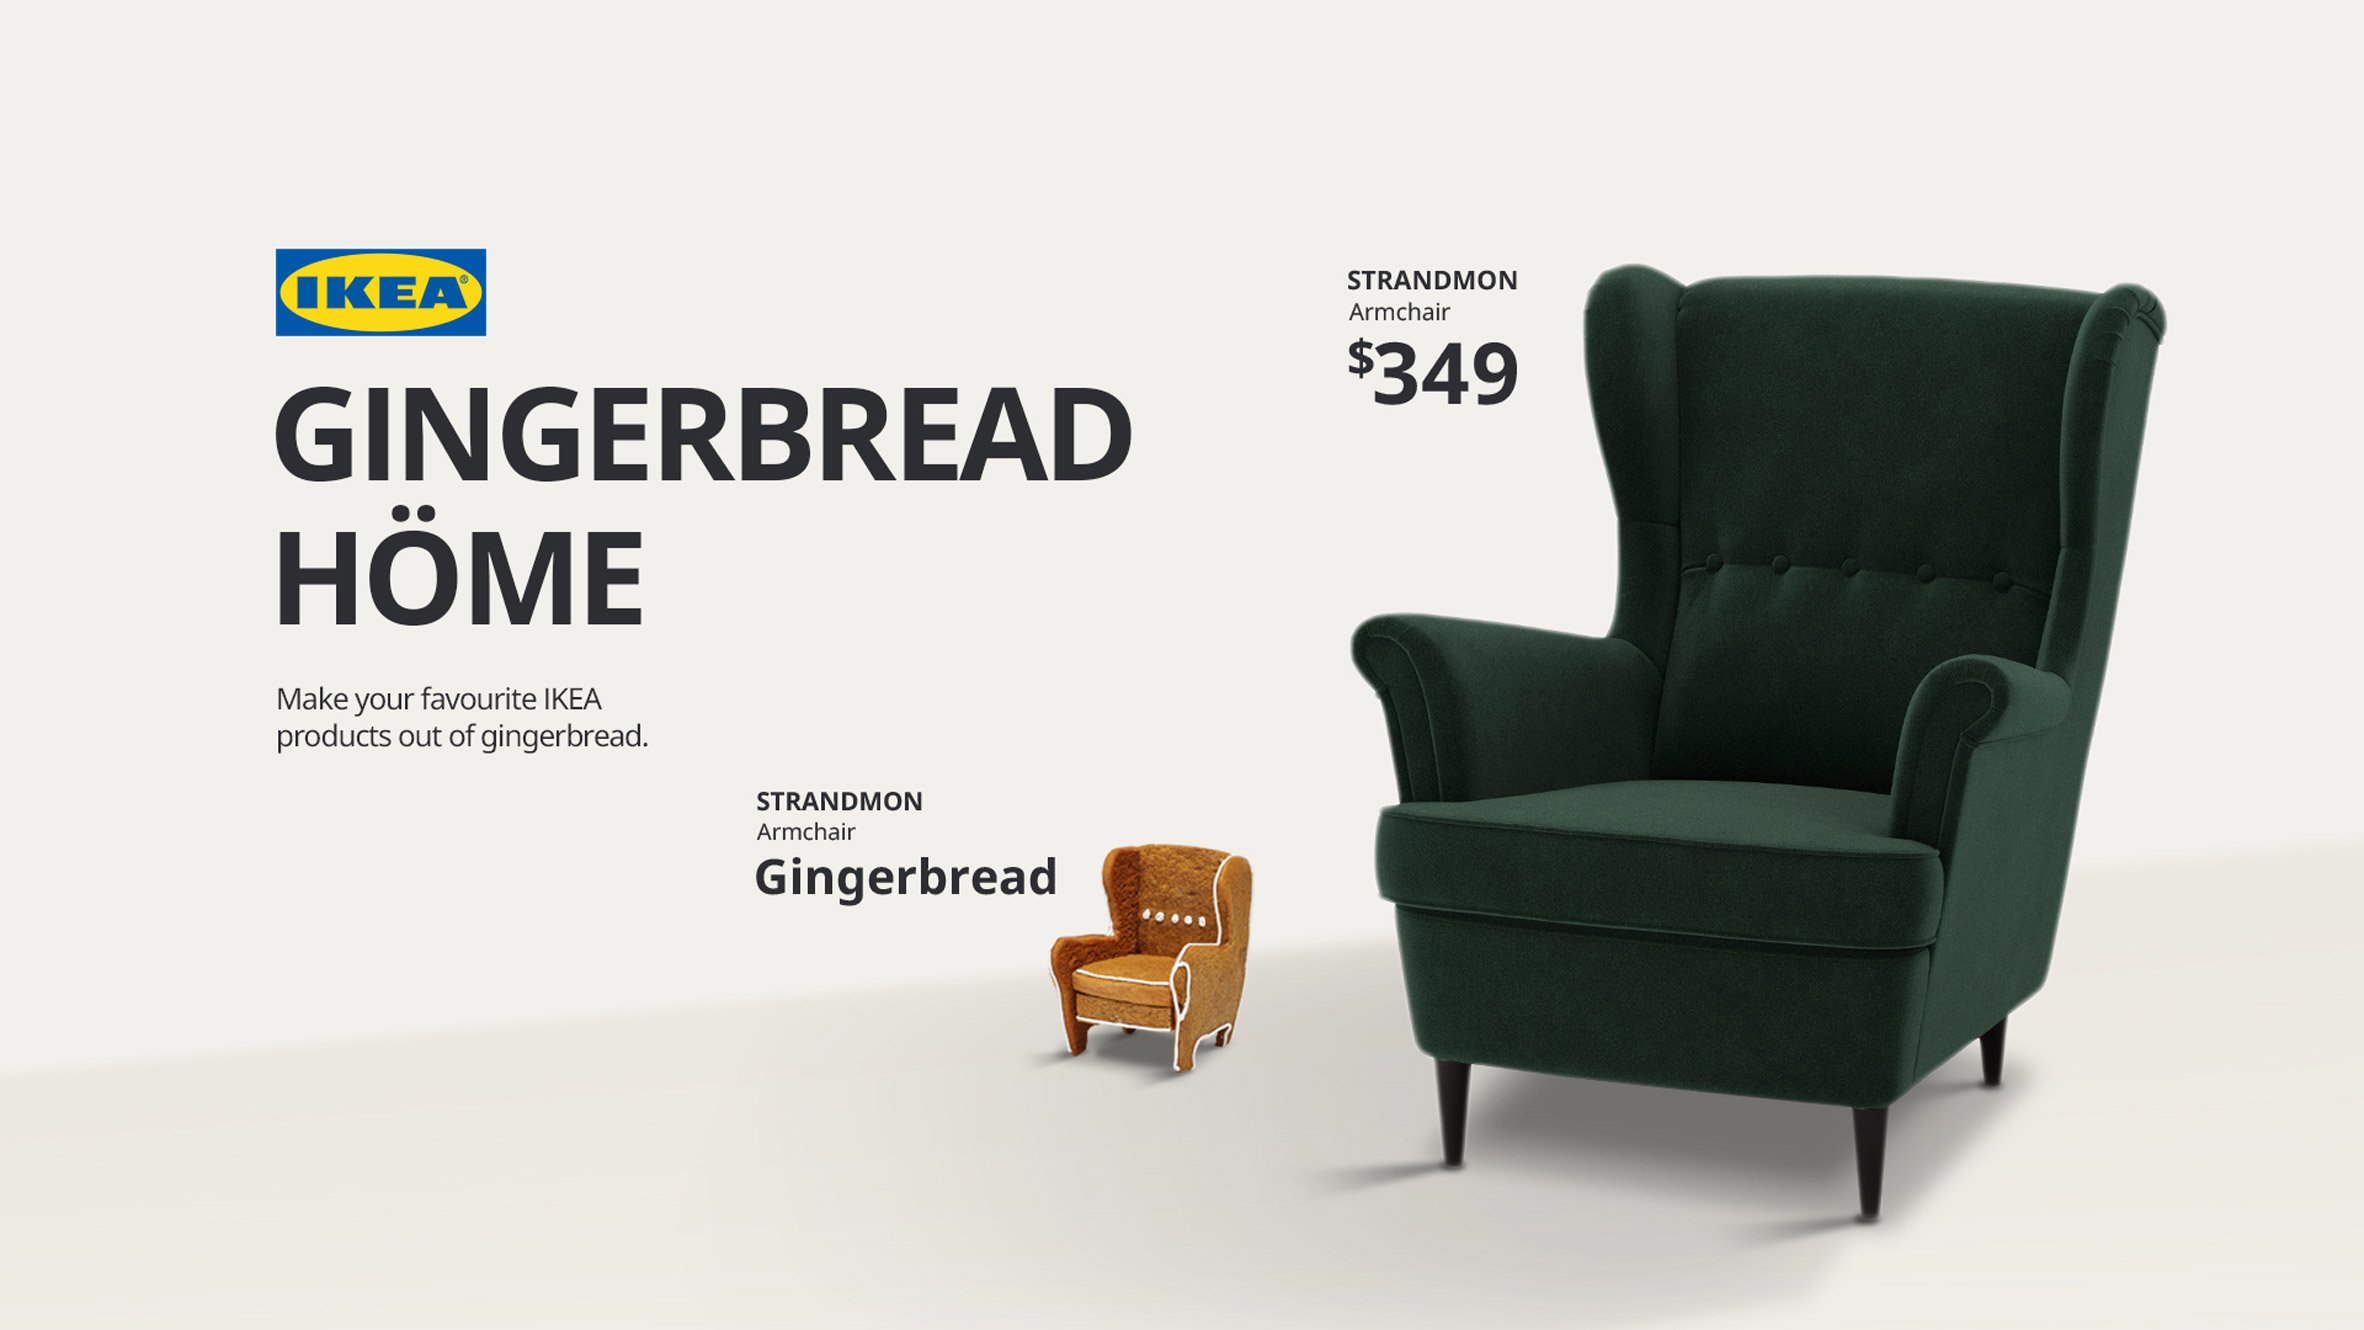 ikea releases flatpack gingerbread höme furniture kit